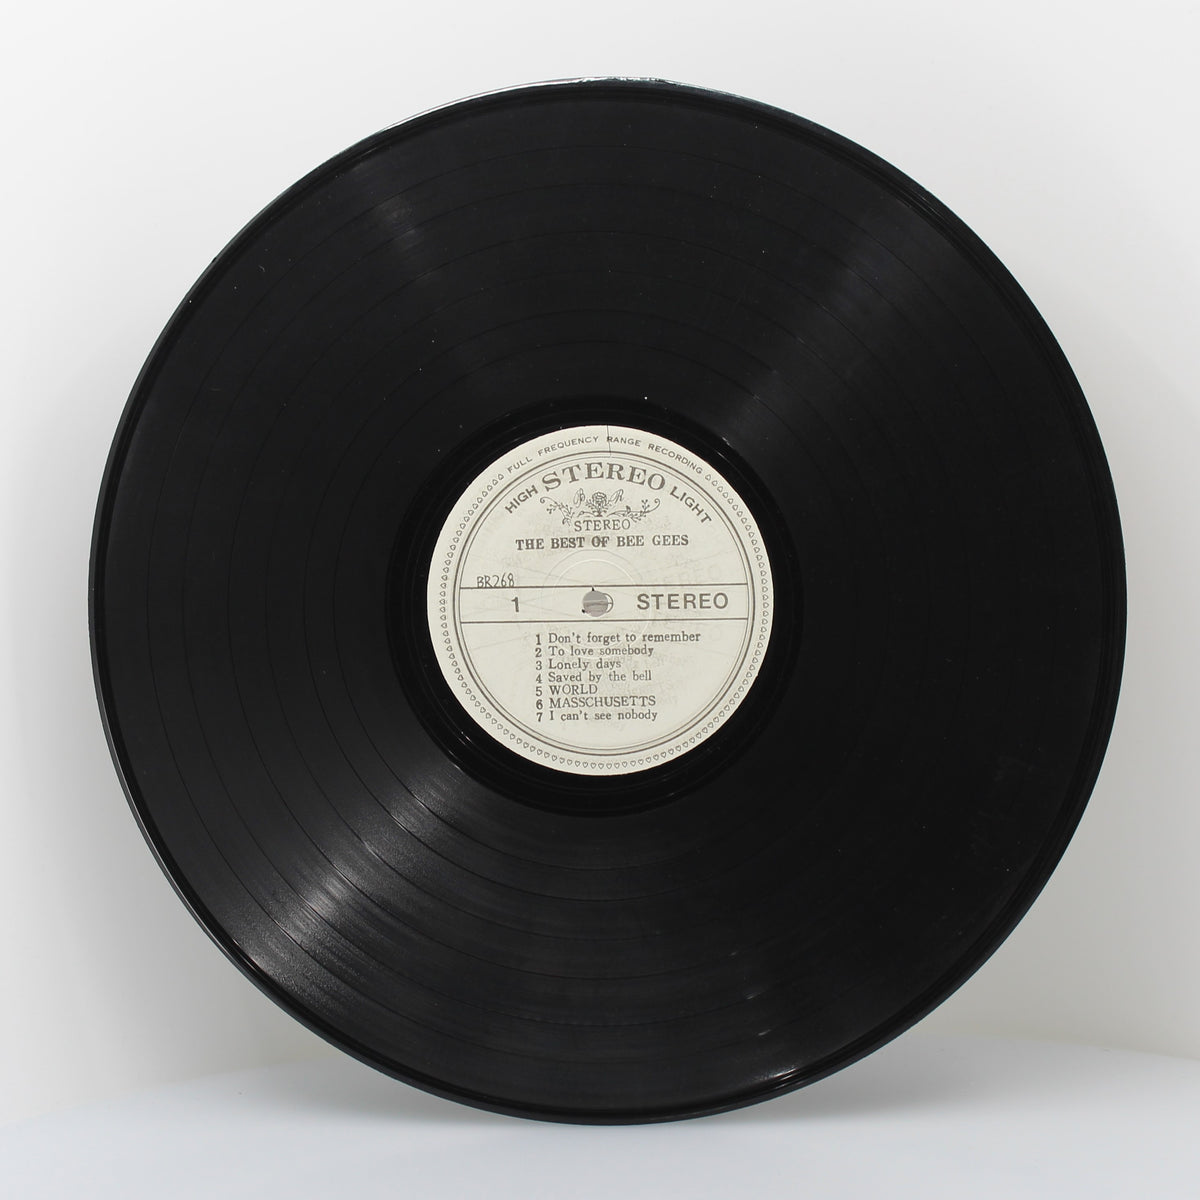 Bee Gees - Best Of, Vinyl LP 33Rpm